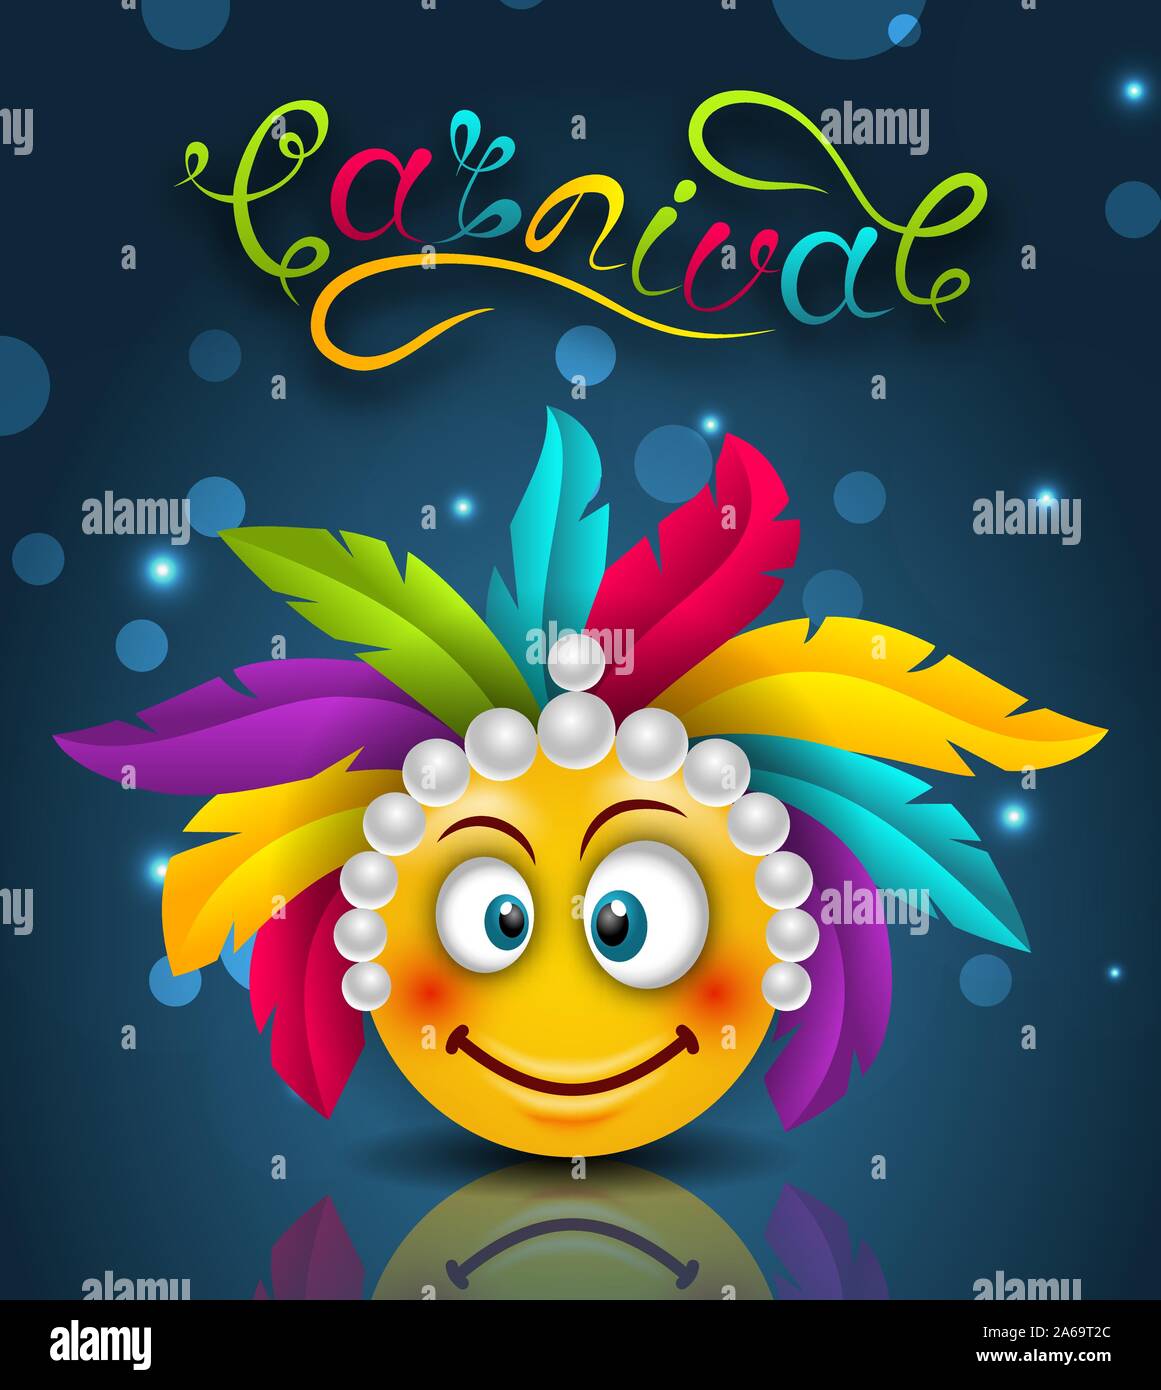 Happy Karneval festliche Schriftzug, Lächeln Emoji mit Federkopfschmuck -  Illustration Vektor Stock-Vektorgrafik - Alamy